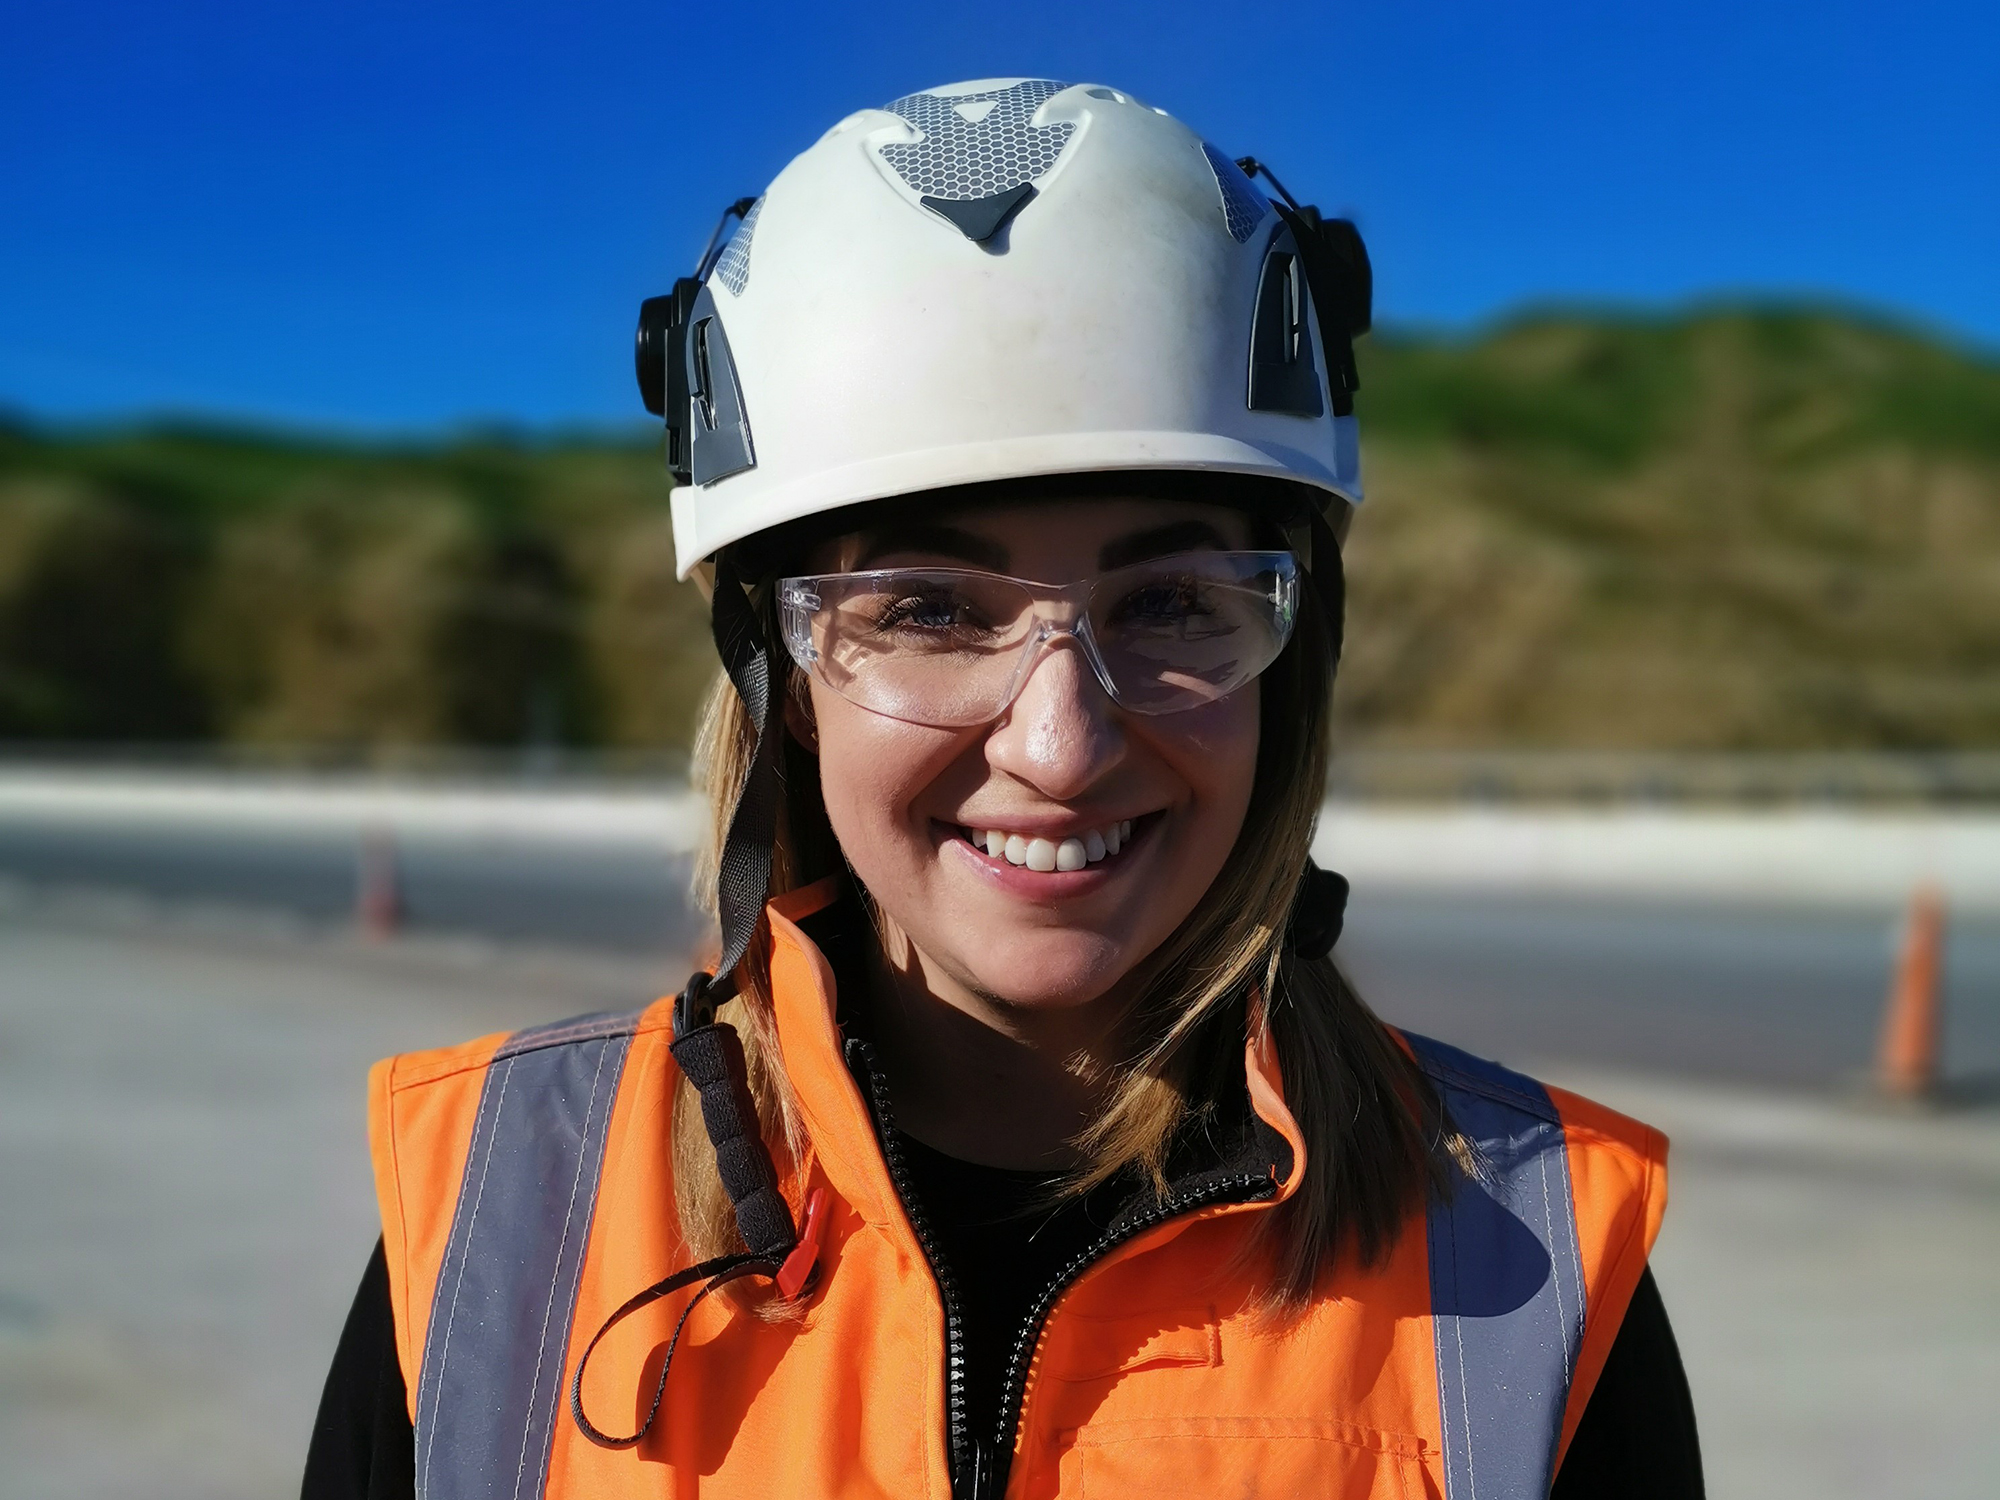 Ellah Black wearing an orange Hi Vis jacket, white helmet and safety glasses.